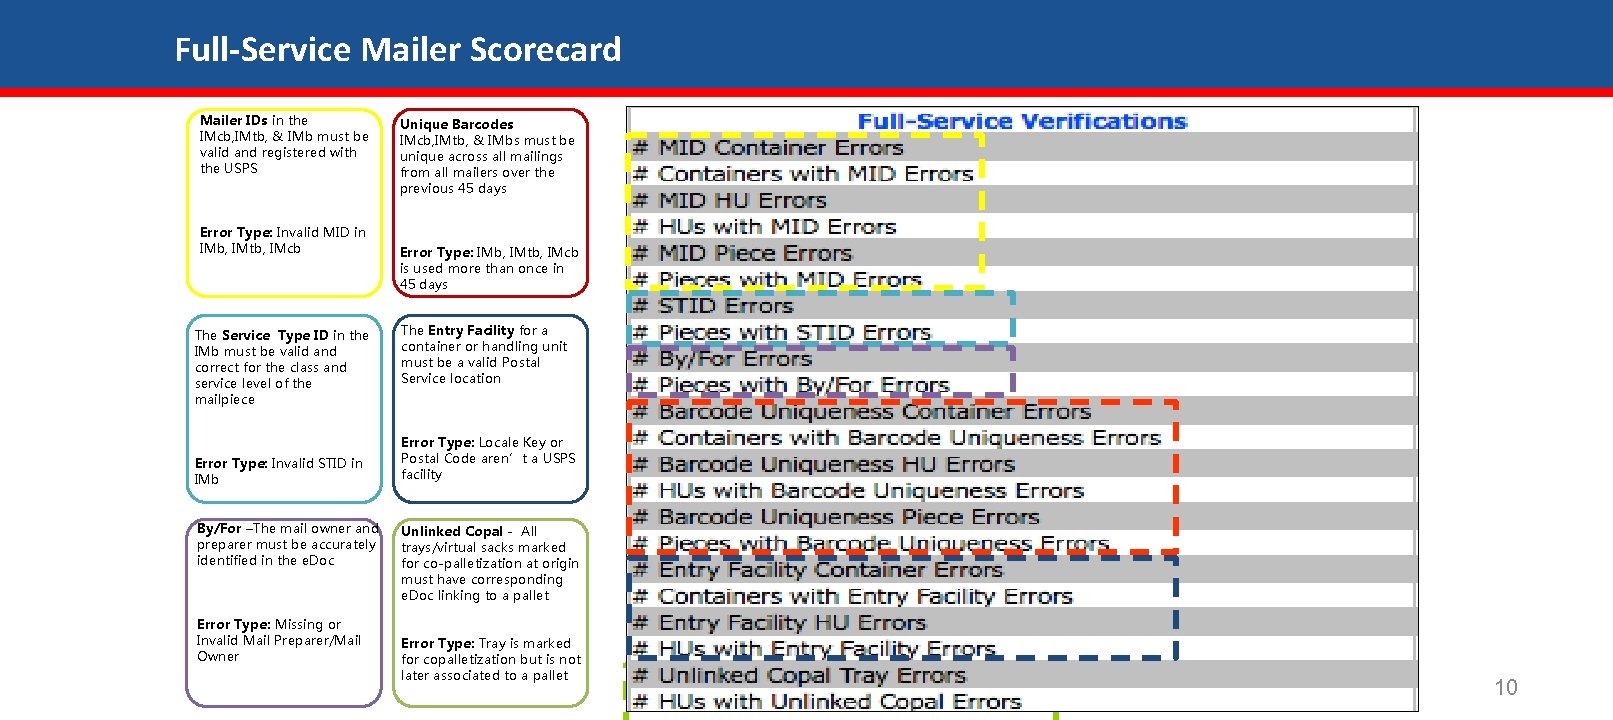 Full-Service Mailer Scorecard Mailer IDs in the IMcb, IMtb, & IMb must be valid